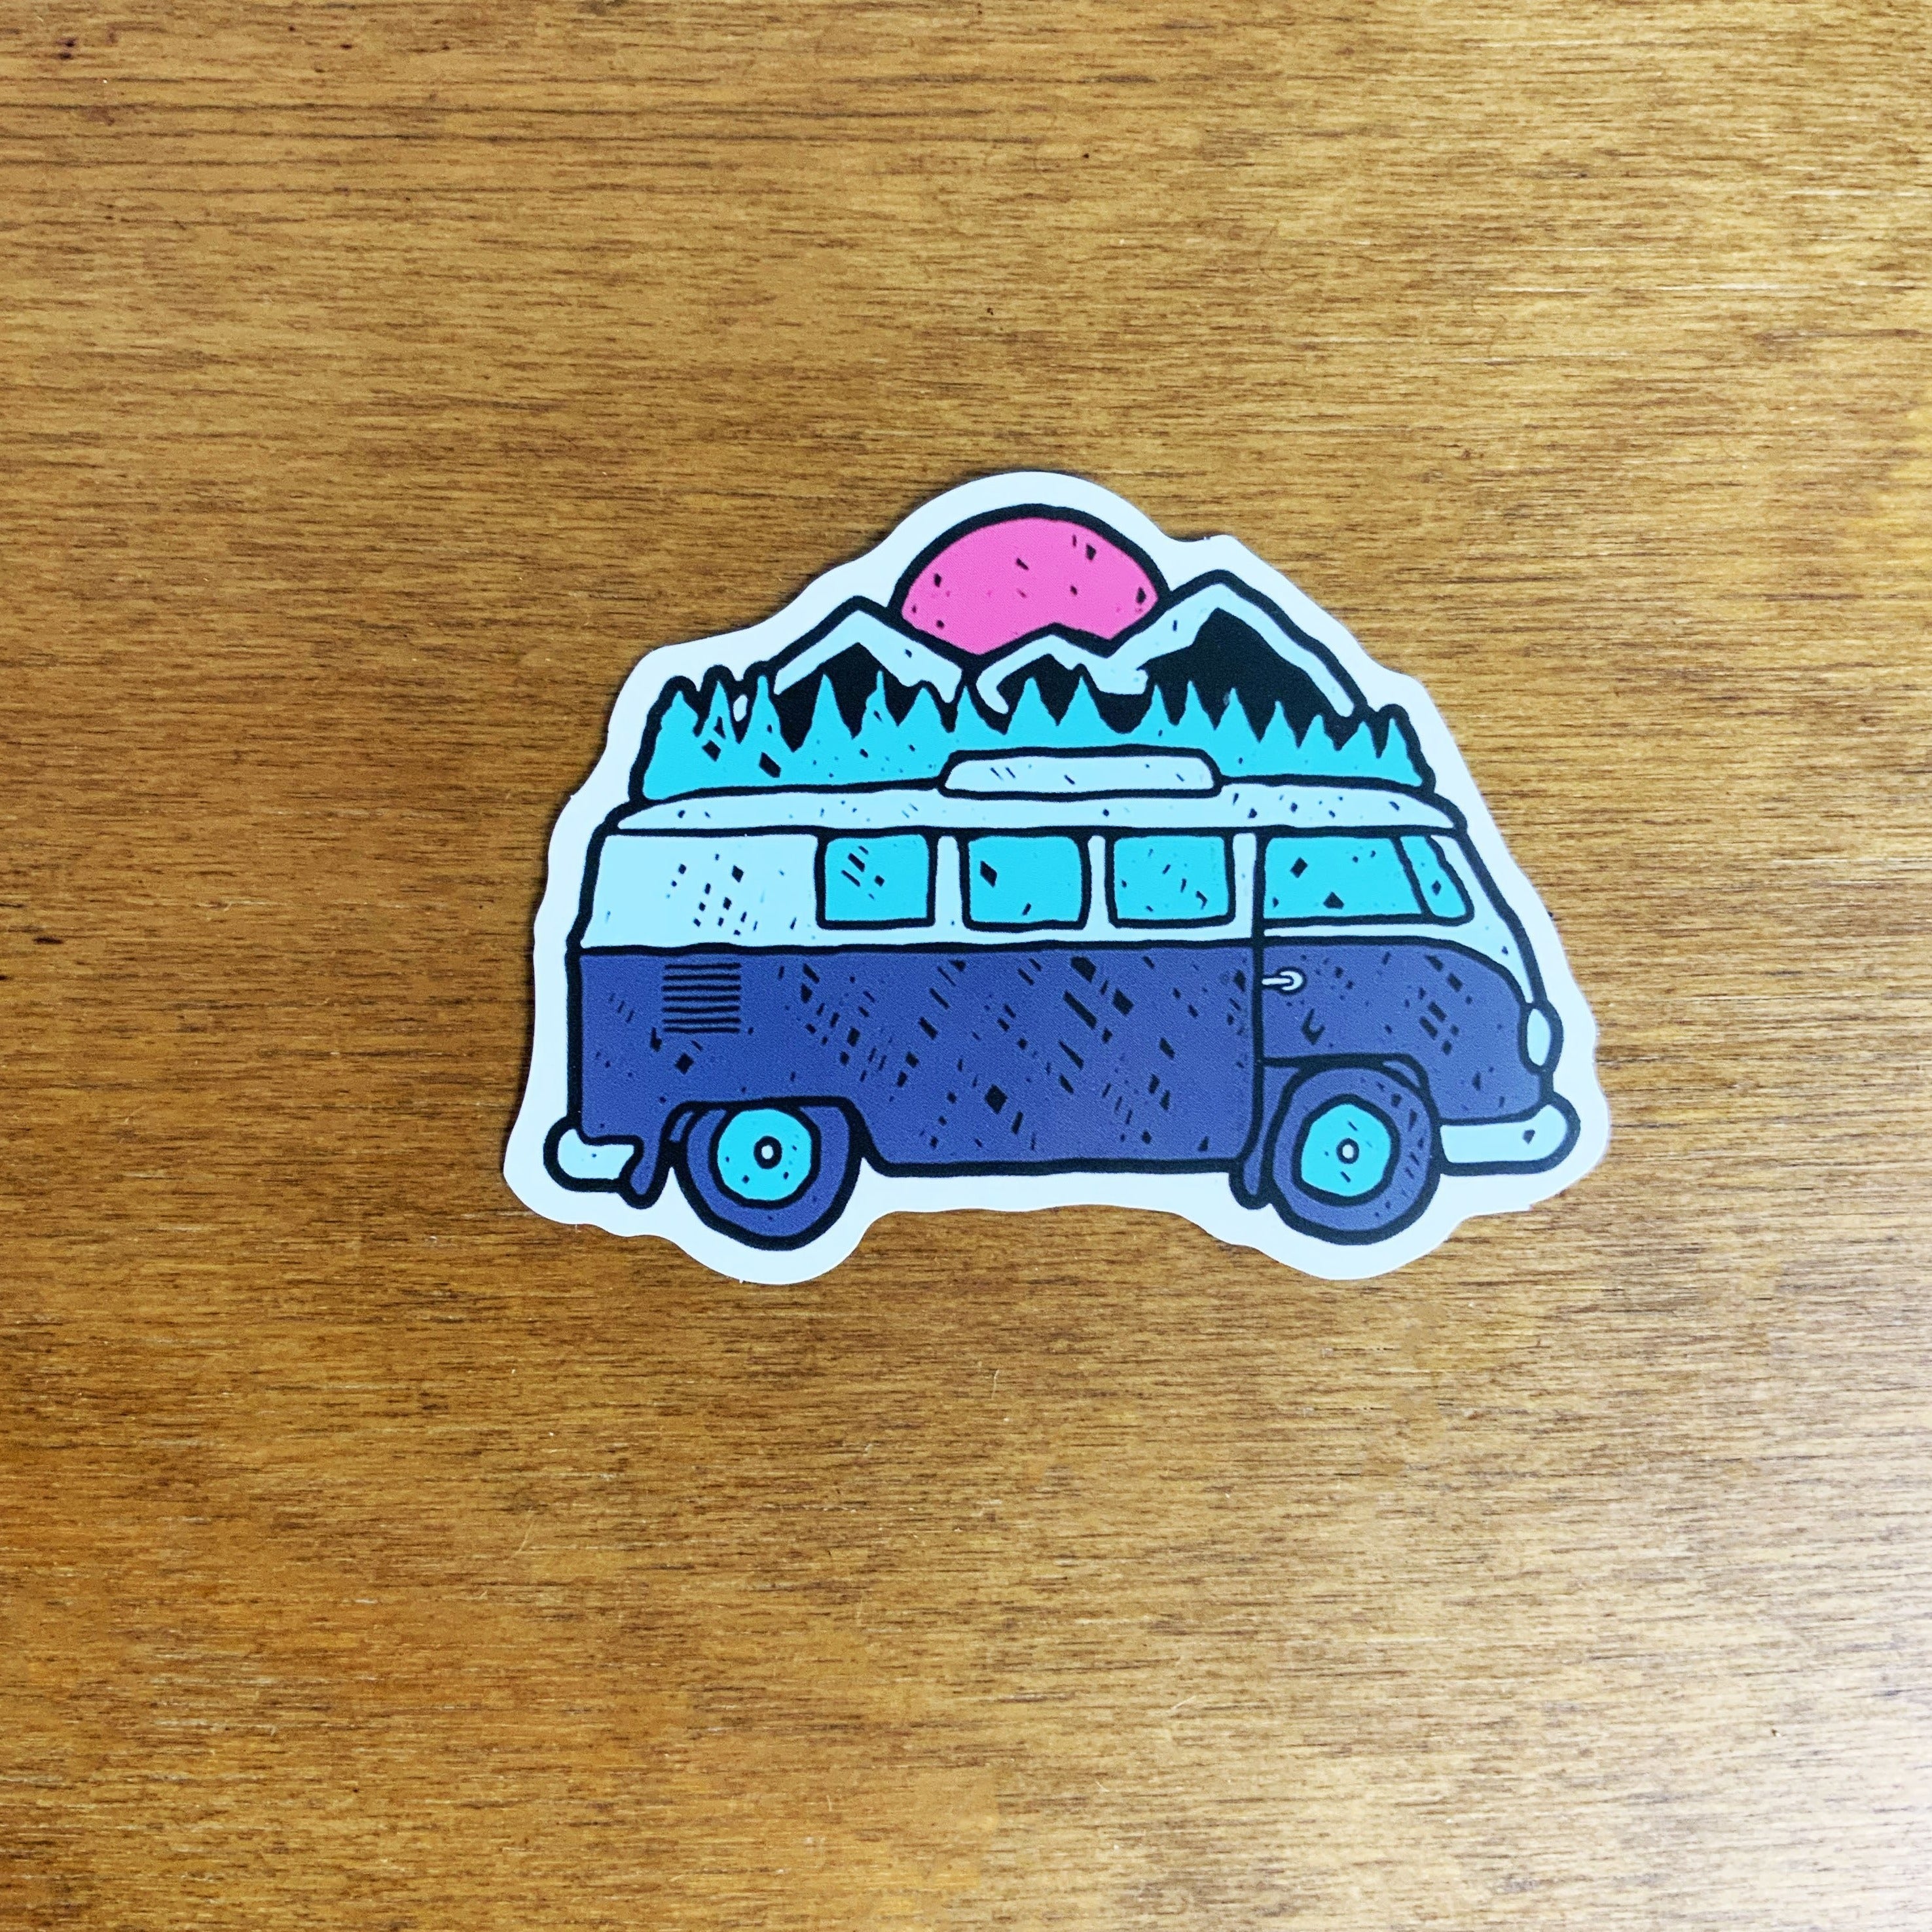 Hippie Adventure Sticker, sticker, Pacific Rayne, Defiance Outdoor Gear Co.